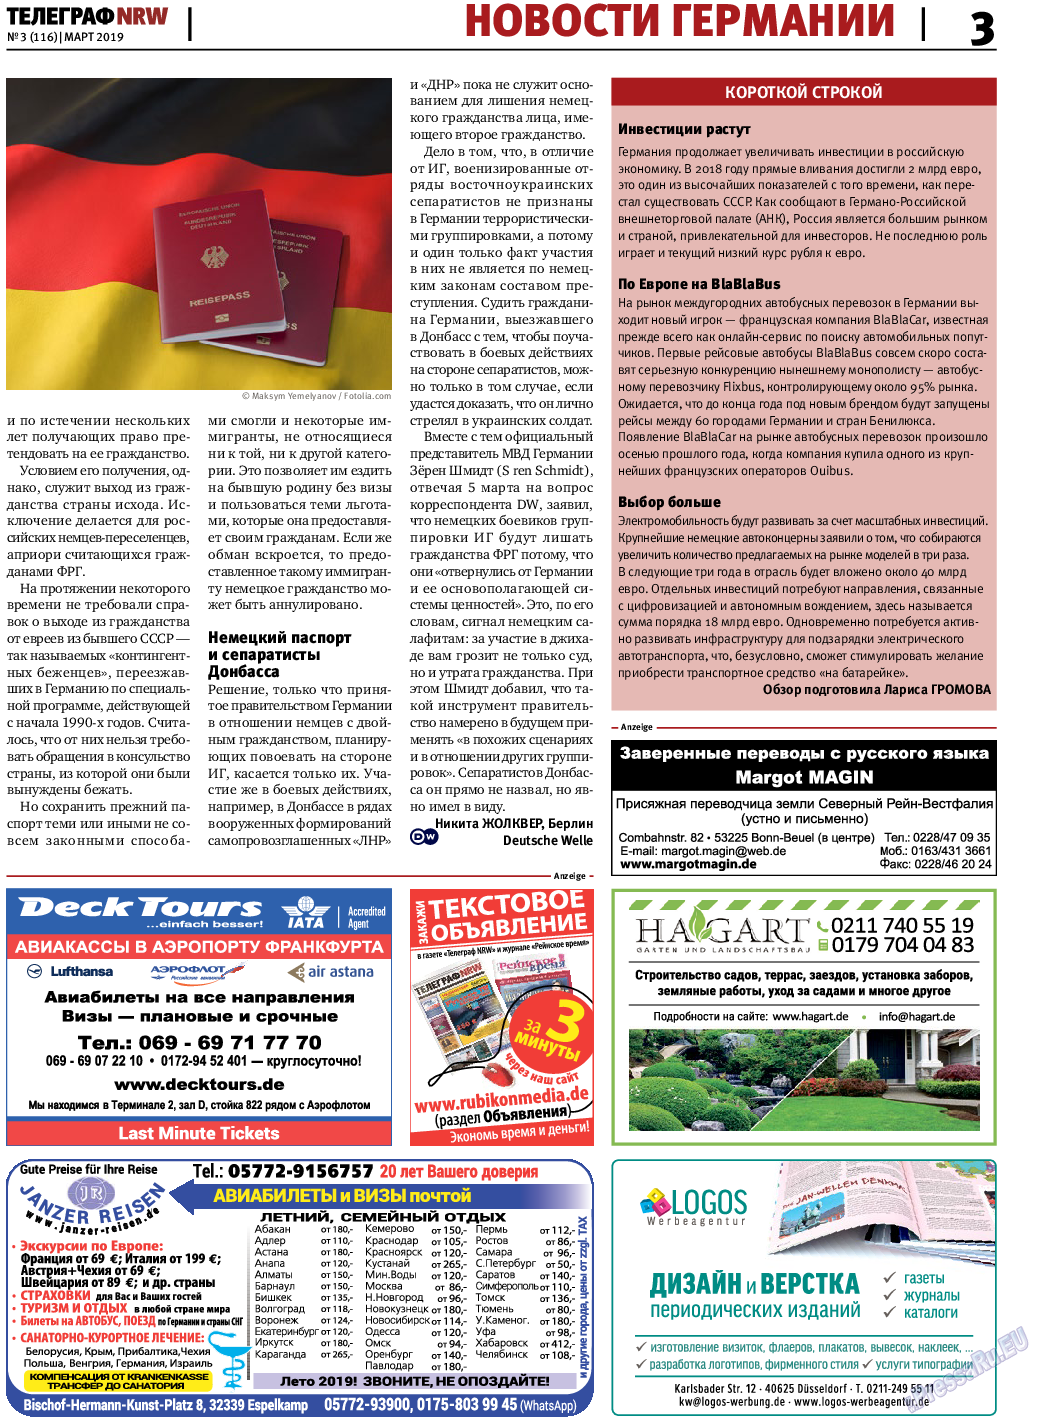 Телеграф NRW, газета. 2019 №3 стр.3